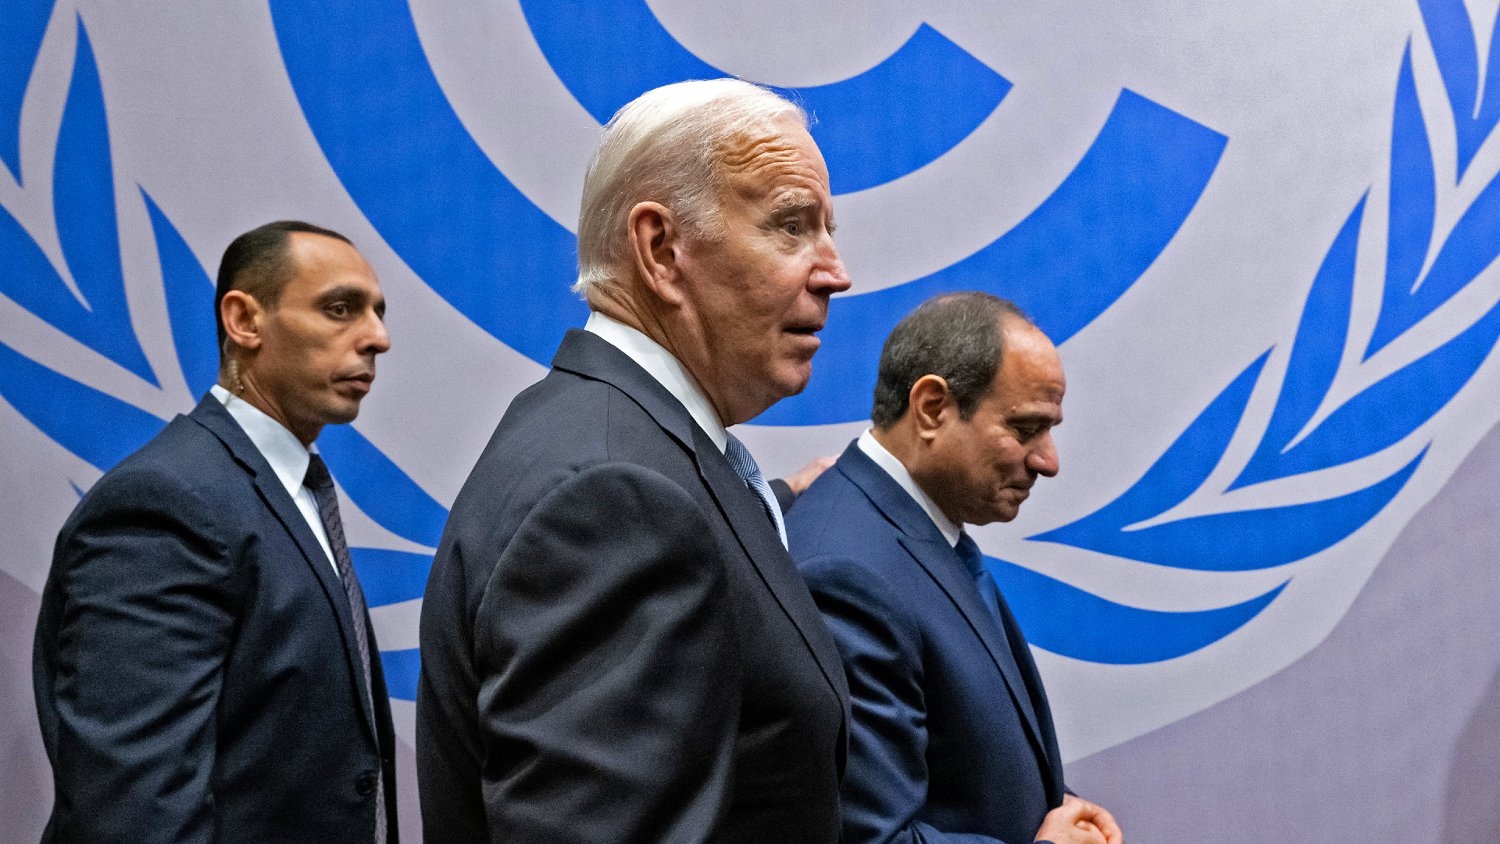 US President Joe Biden and his Egyptian counterpart Abdel Fattah el-Sisi during the COP27 summit in Sharm el-Sheikh, Egypt on 11 November 2022.